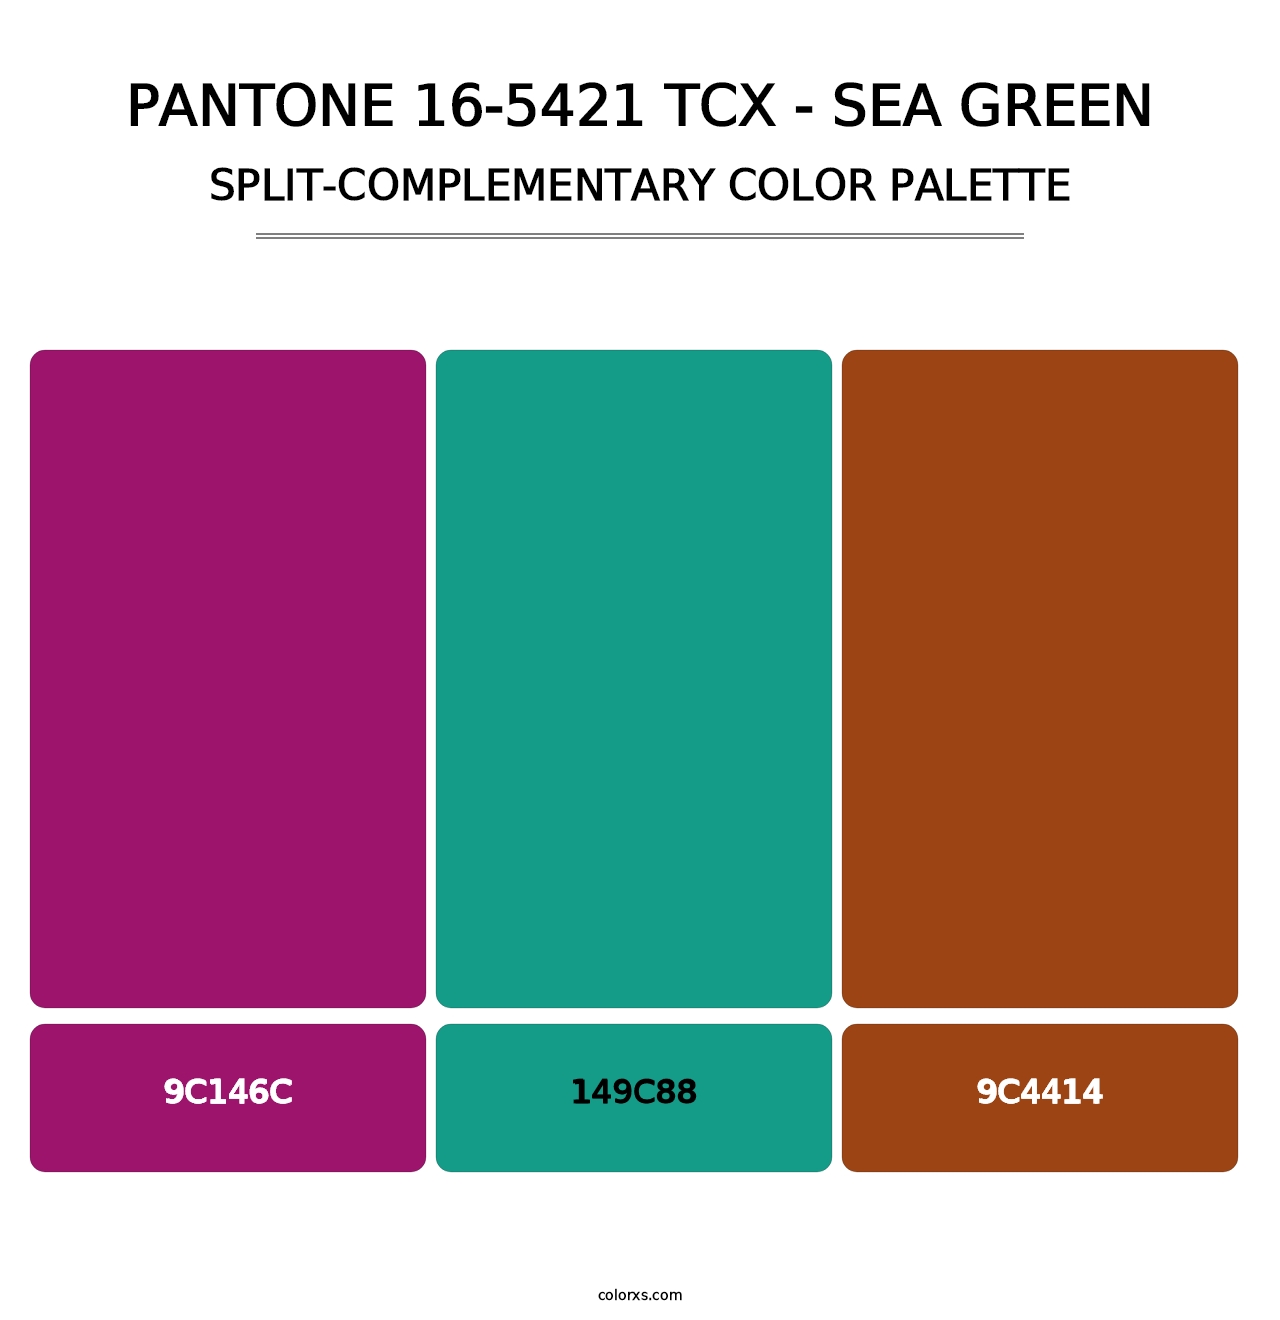 PANTONE 16-5421 TCX - Sea Green - Split-Complementary Color Palette